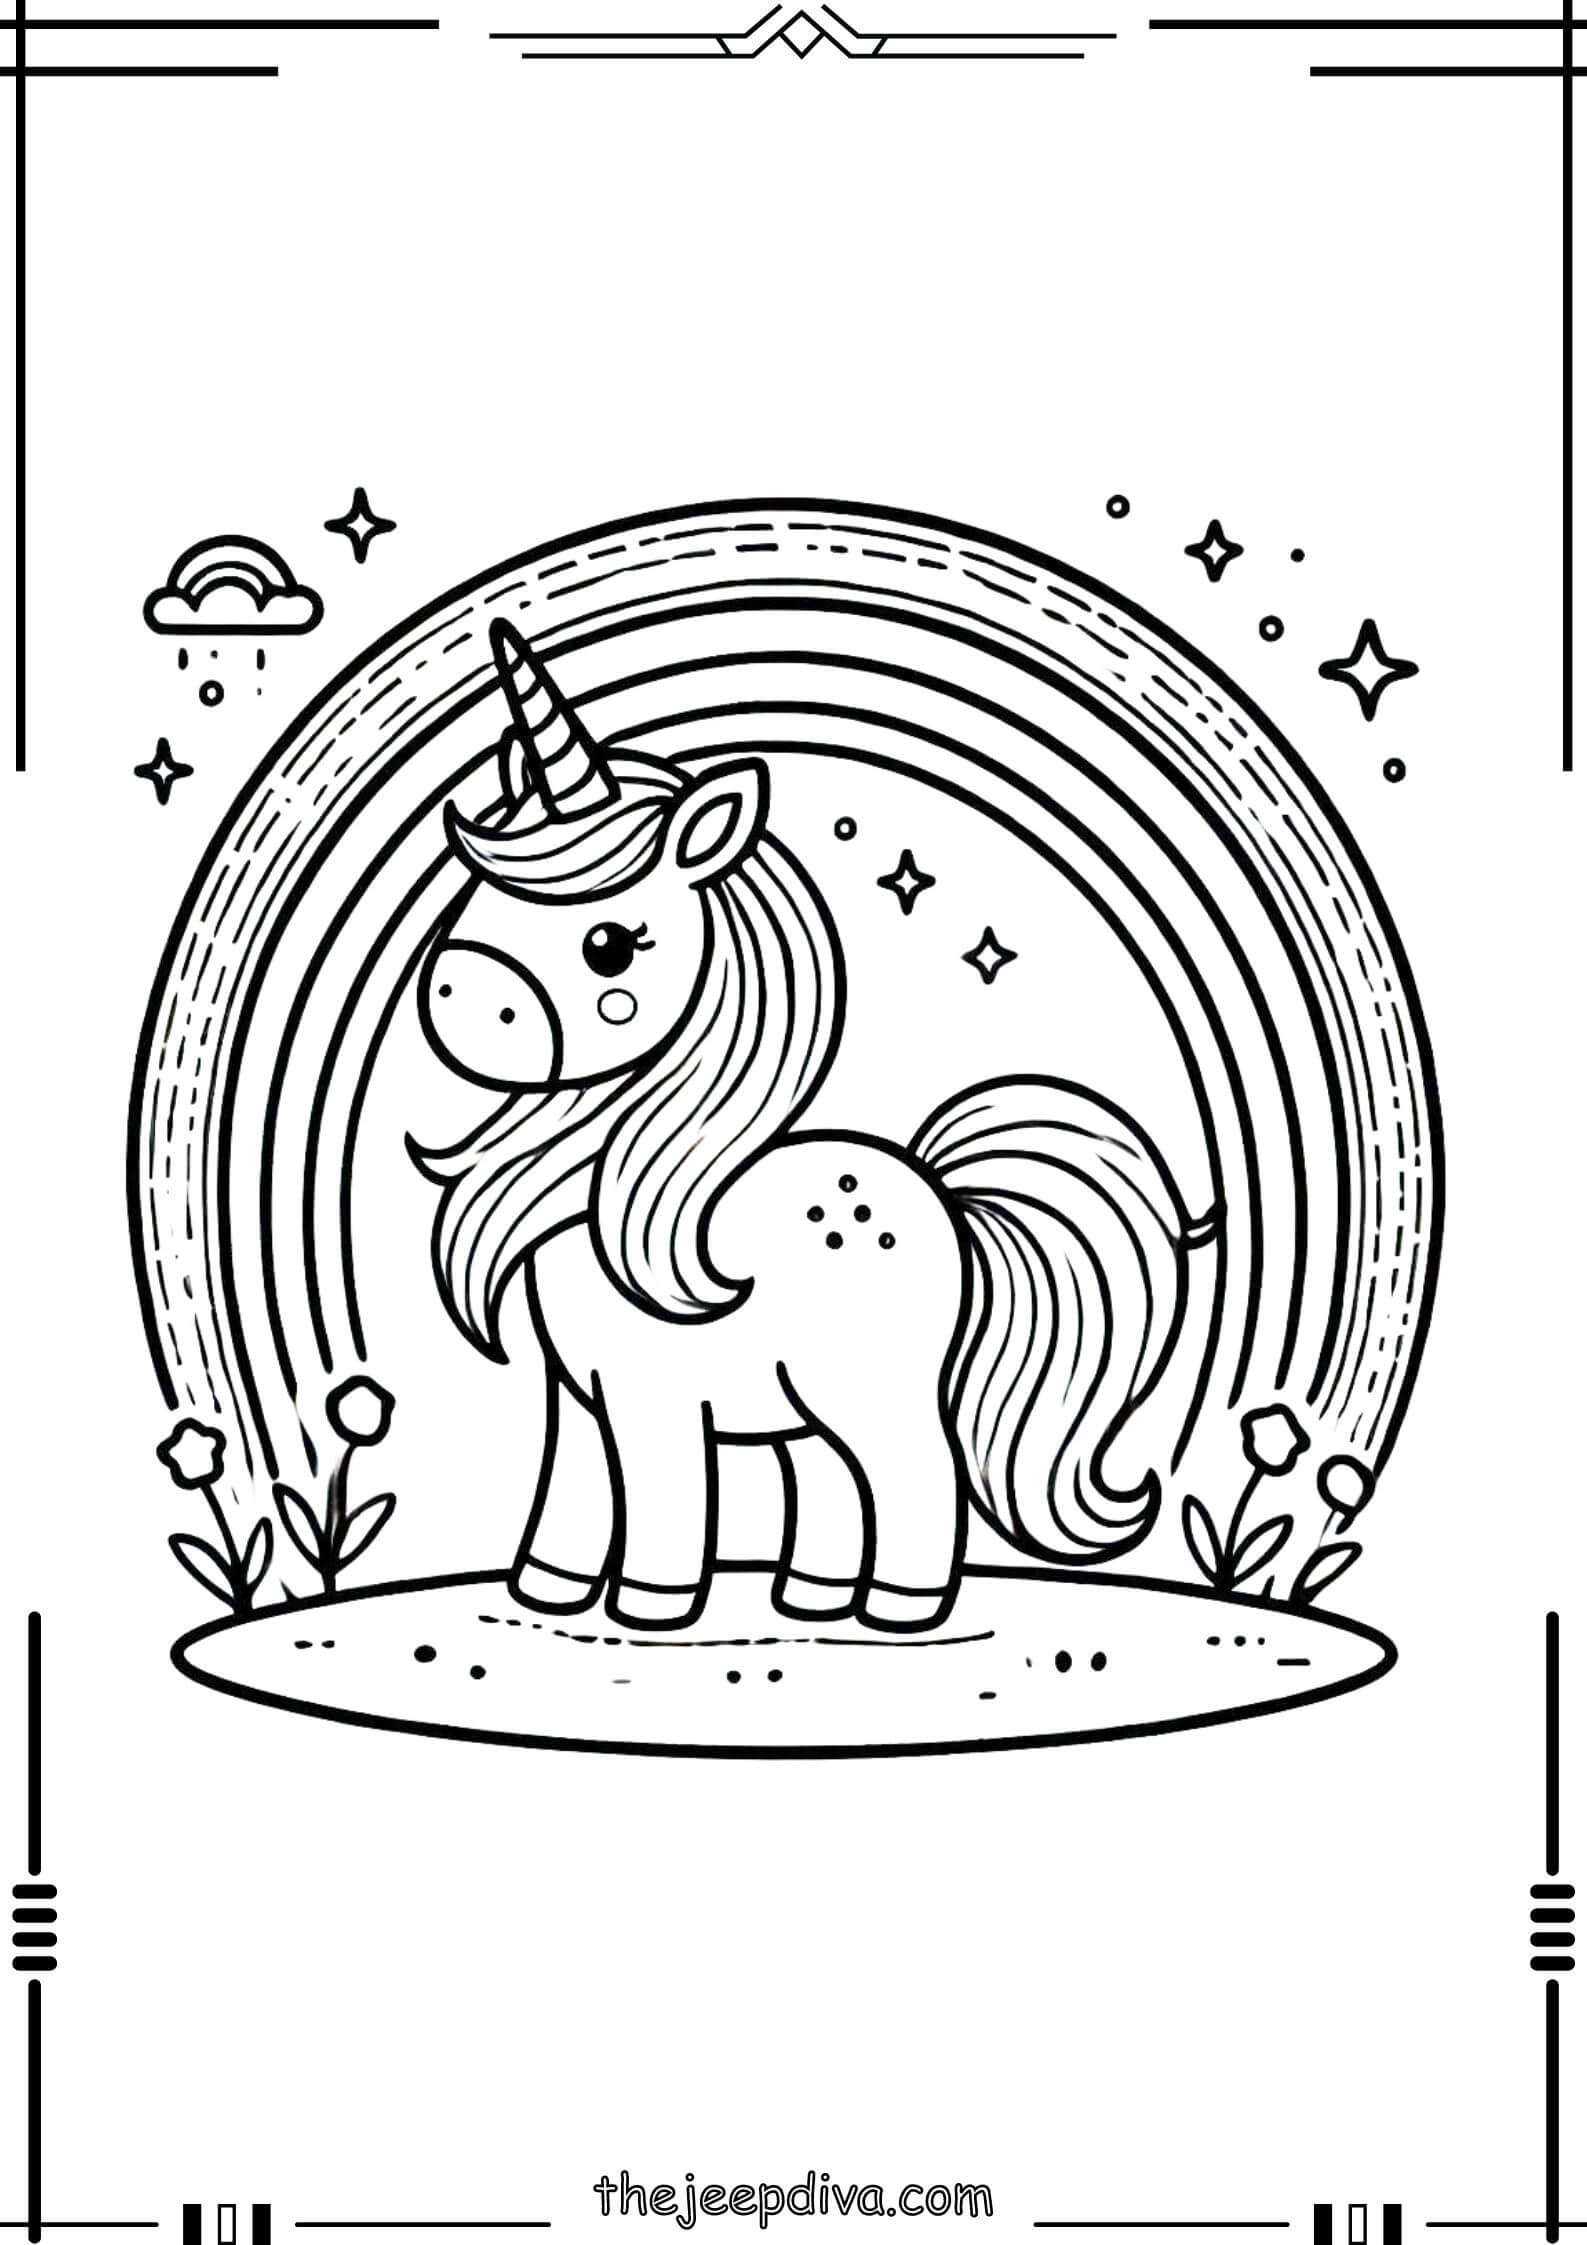 unicorn-coloring-page-medium-1